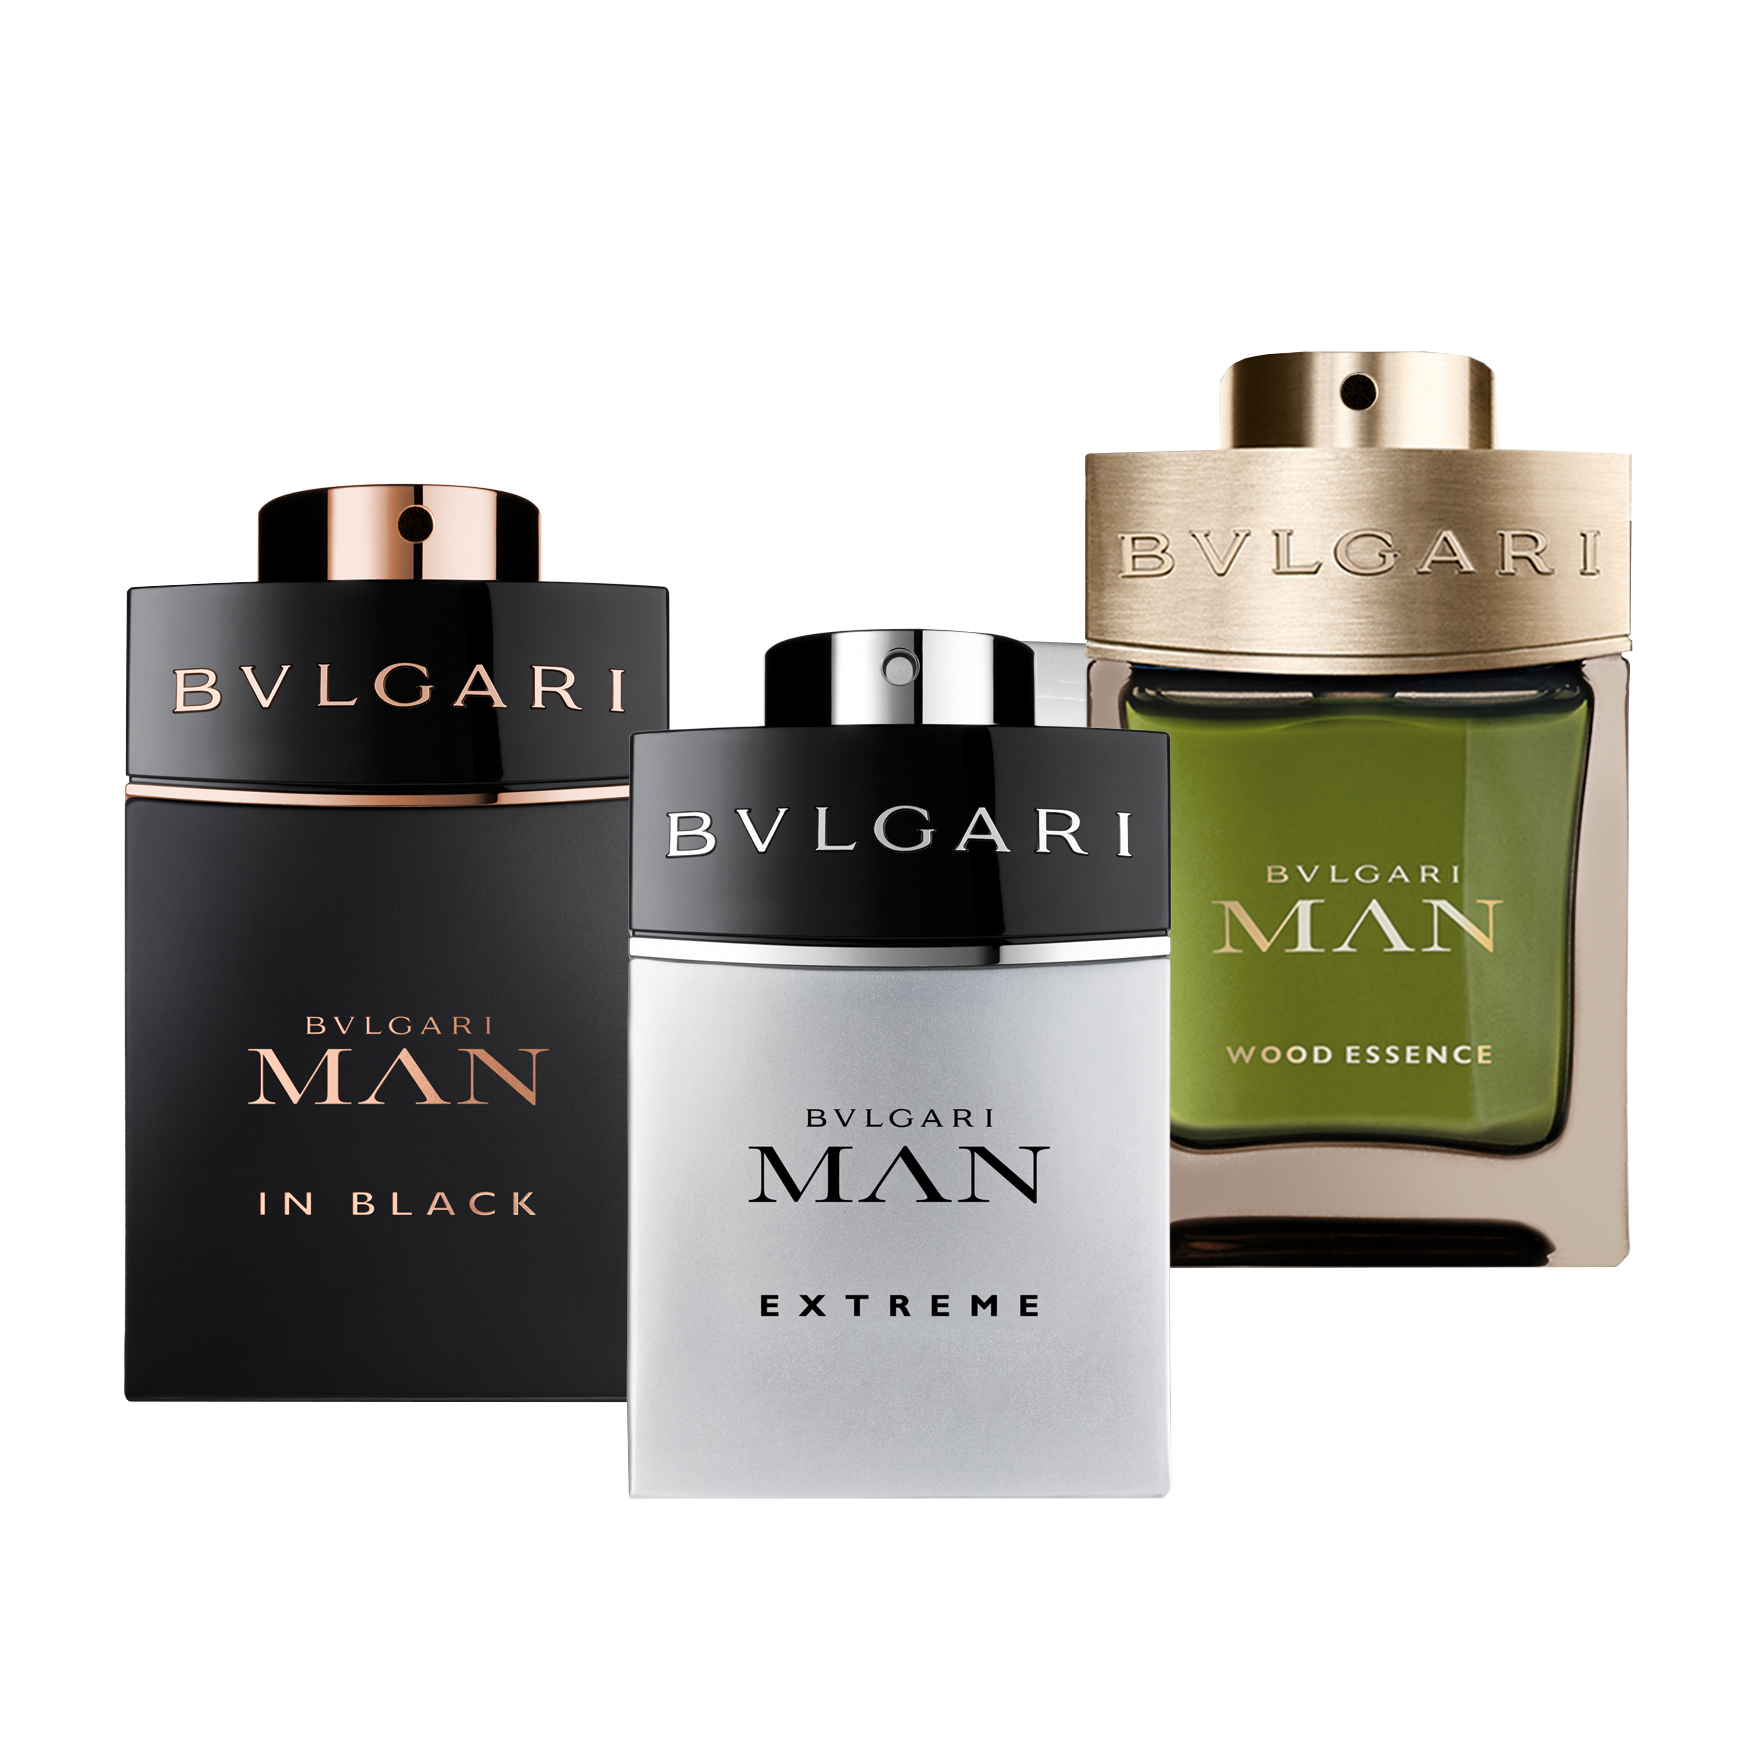 Bvlgari Man Travel Collection - 3x15ml 